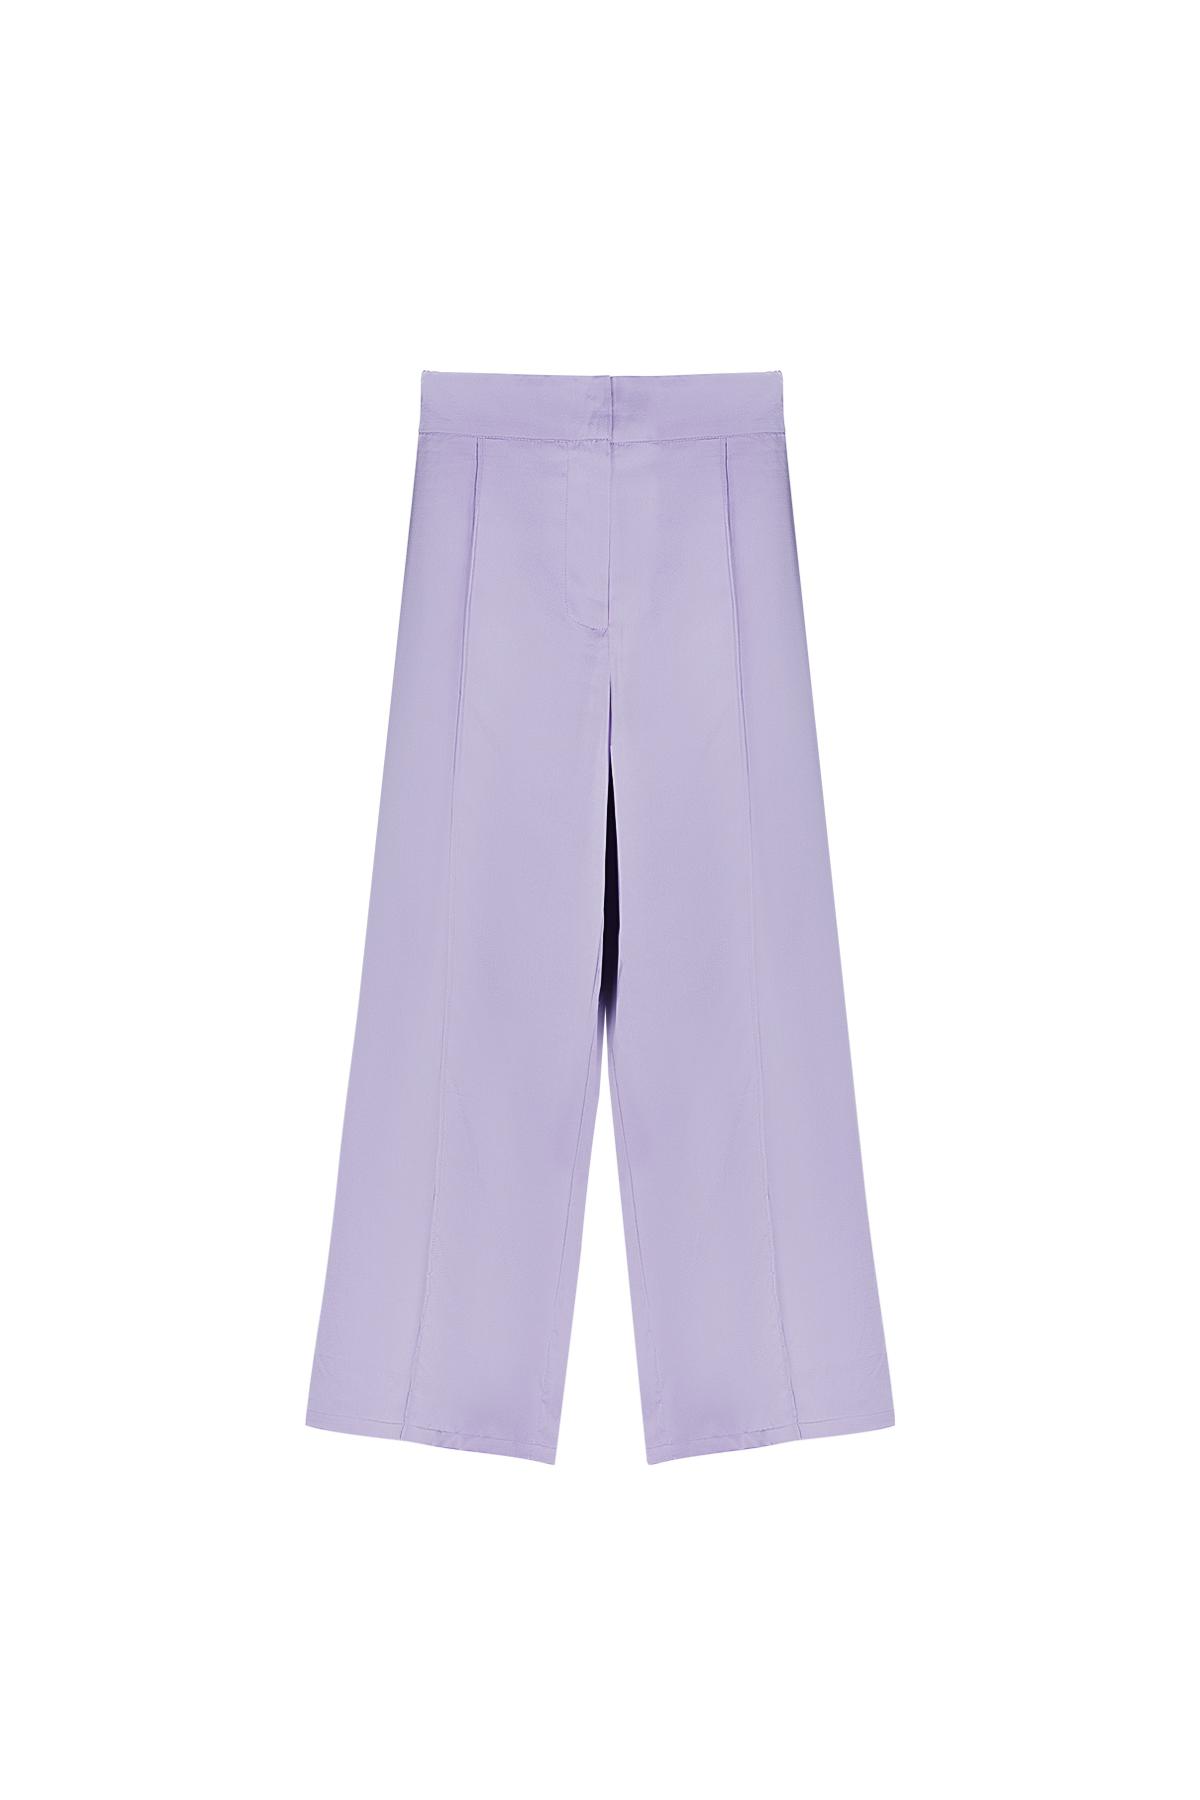 Pantalon tissu brillant Violet S h5 